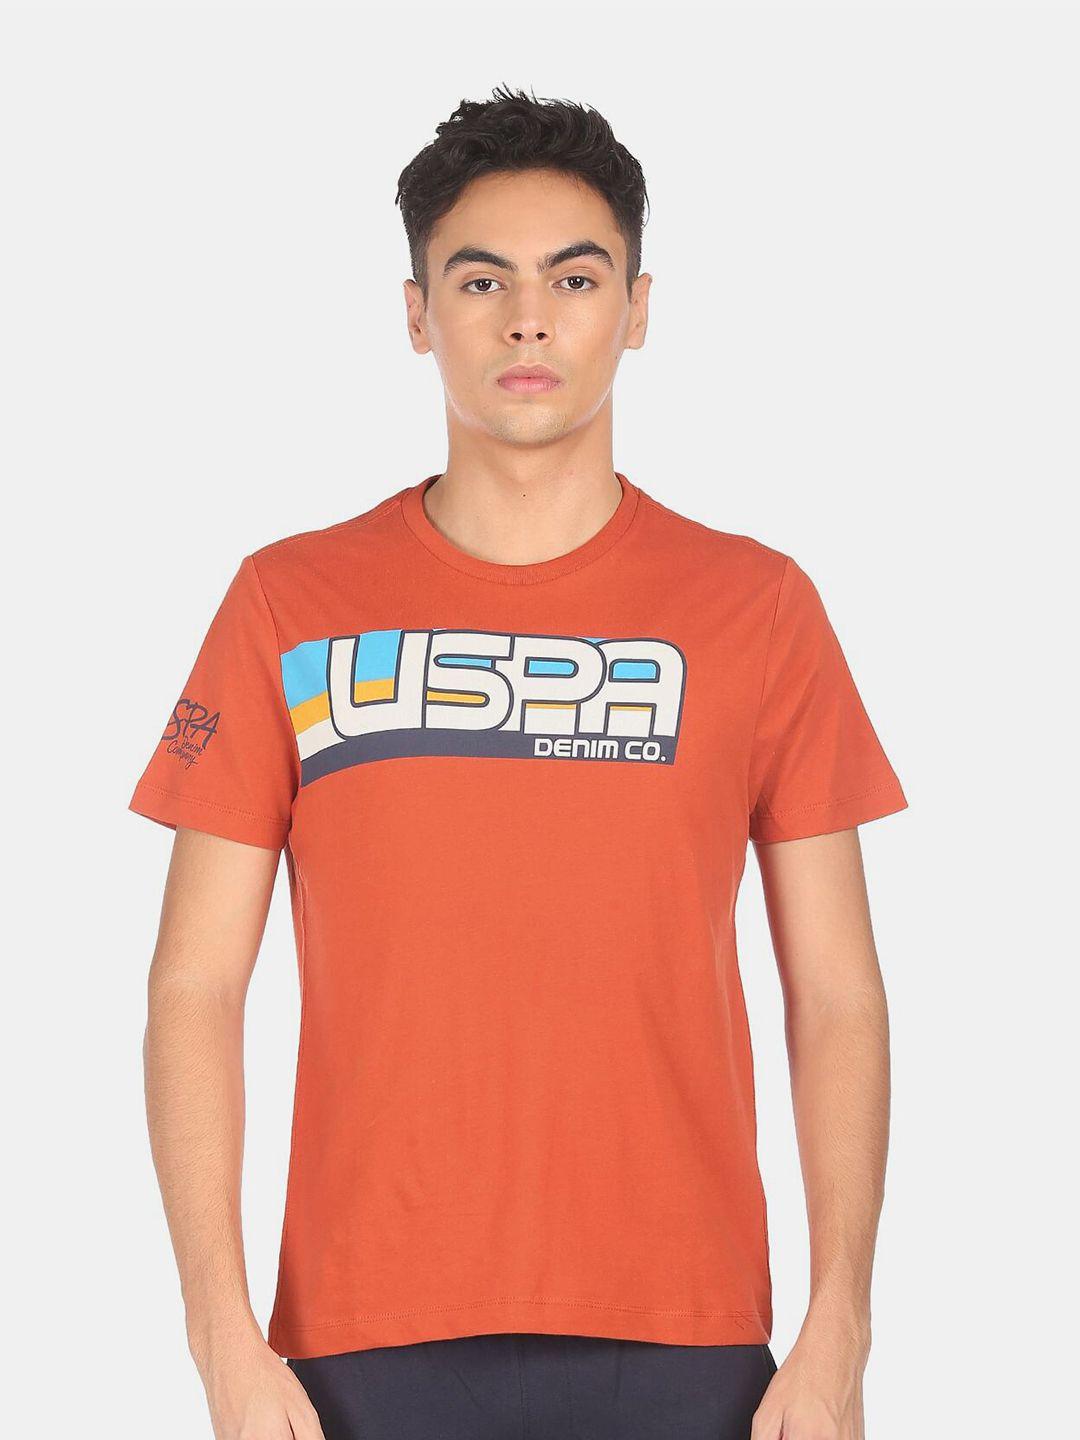 u.s. polo assn. denim co. men orange typography printed cotton t-shirt